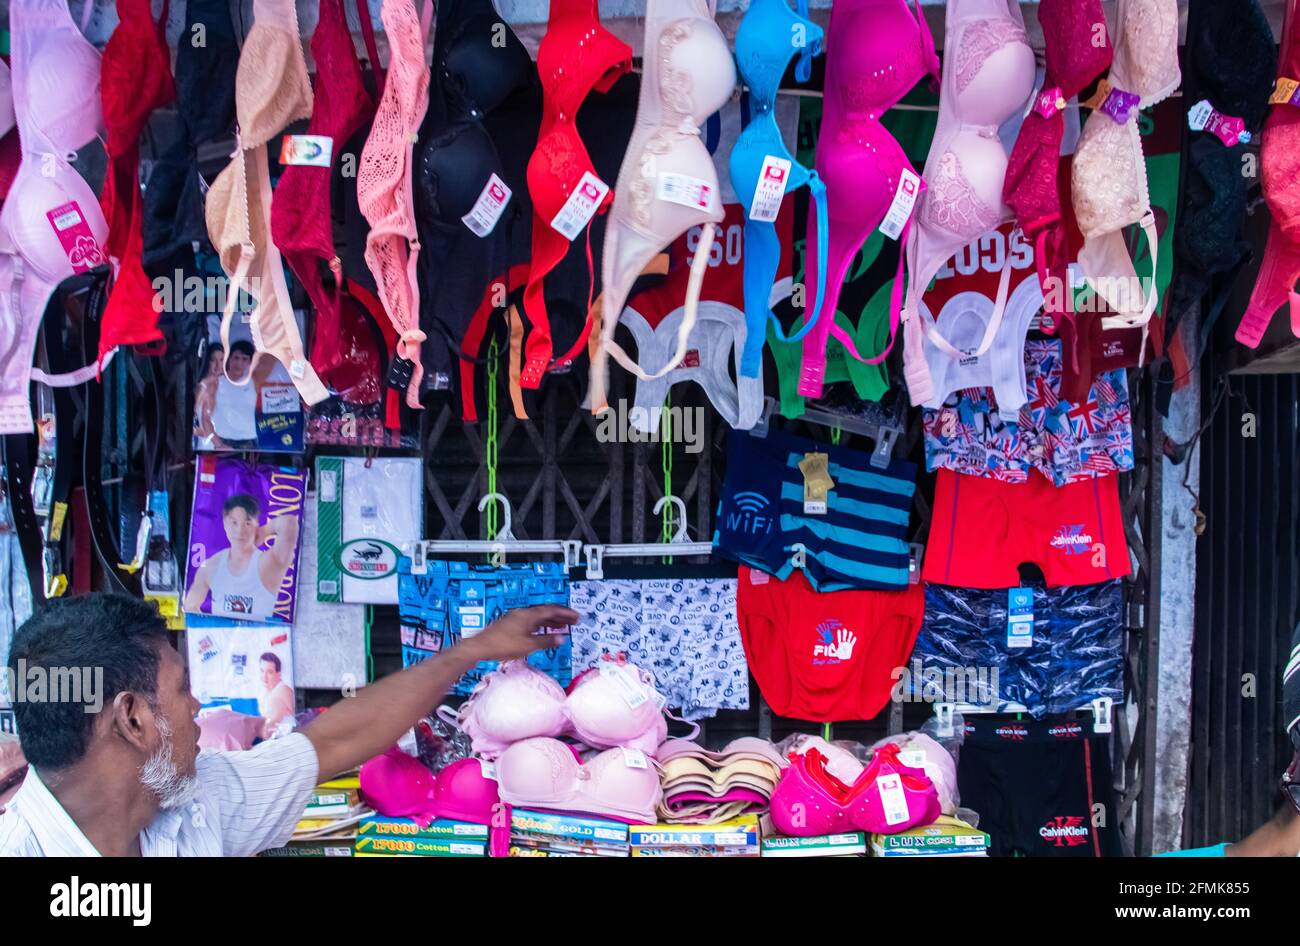 Bra shop display in the market, I captured this image Chak Bazar, Dhaka,  Bangladesh, Asia Stock Photo - Alamy